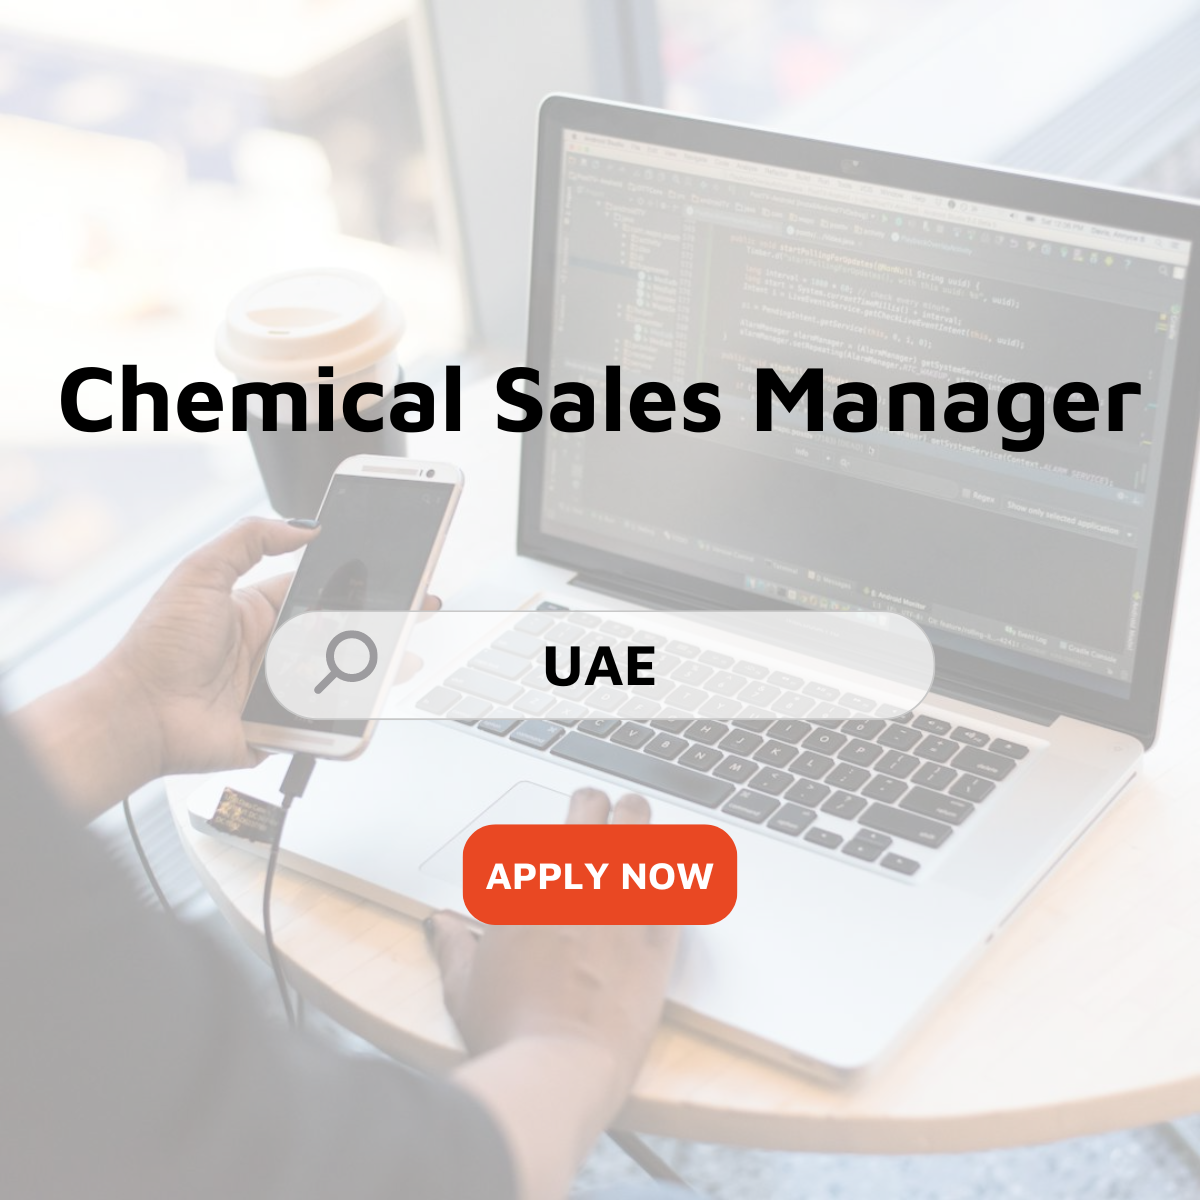 Chemical Sales Manager - Dubai